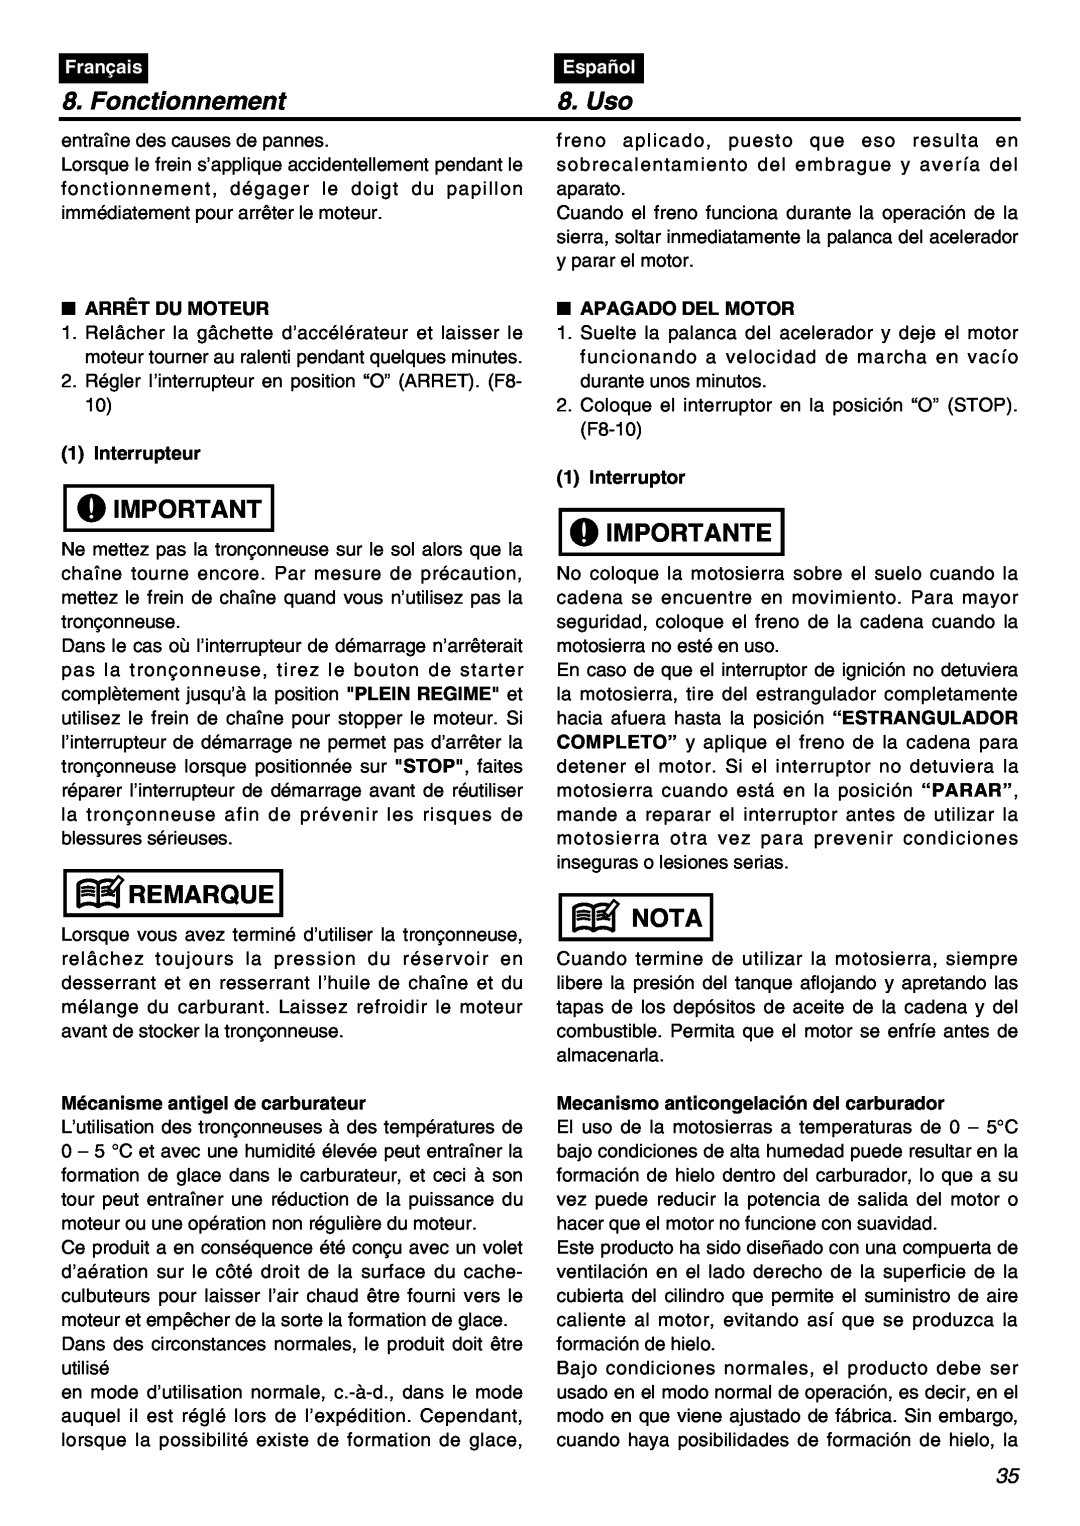 RedMax GZ400 manual Fonctionnement, Uso, Remarque, Importante, Nota, Français, Español 